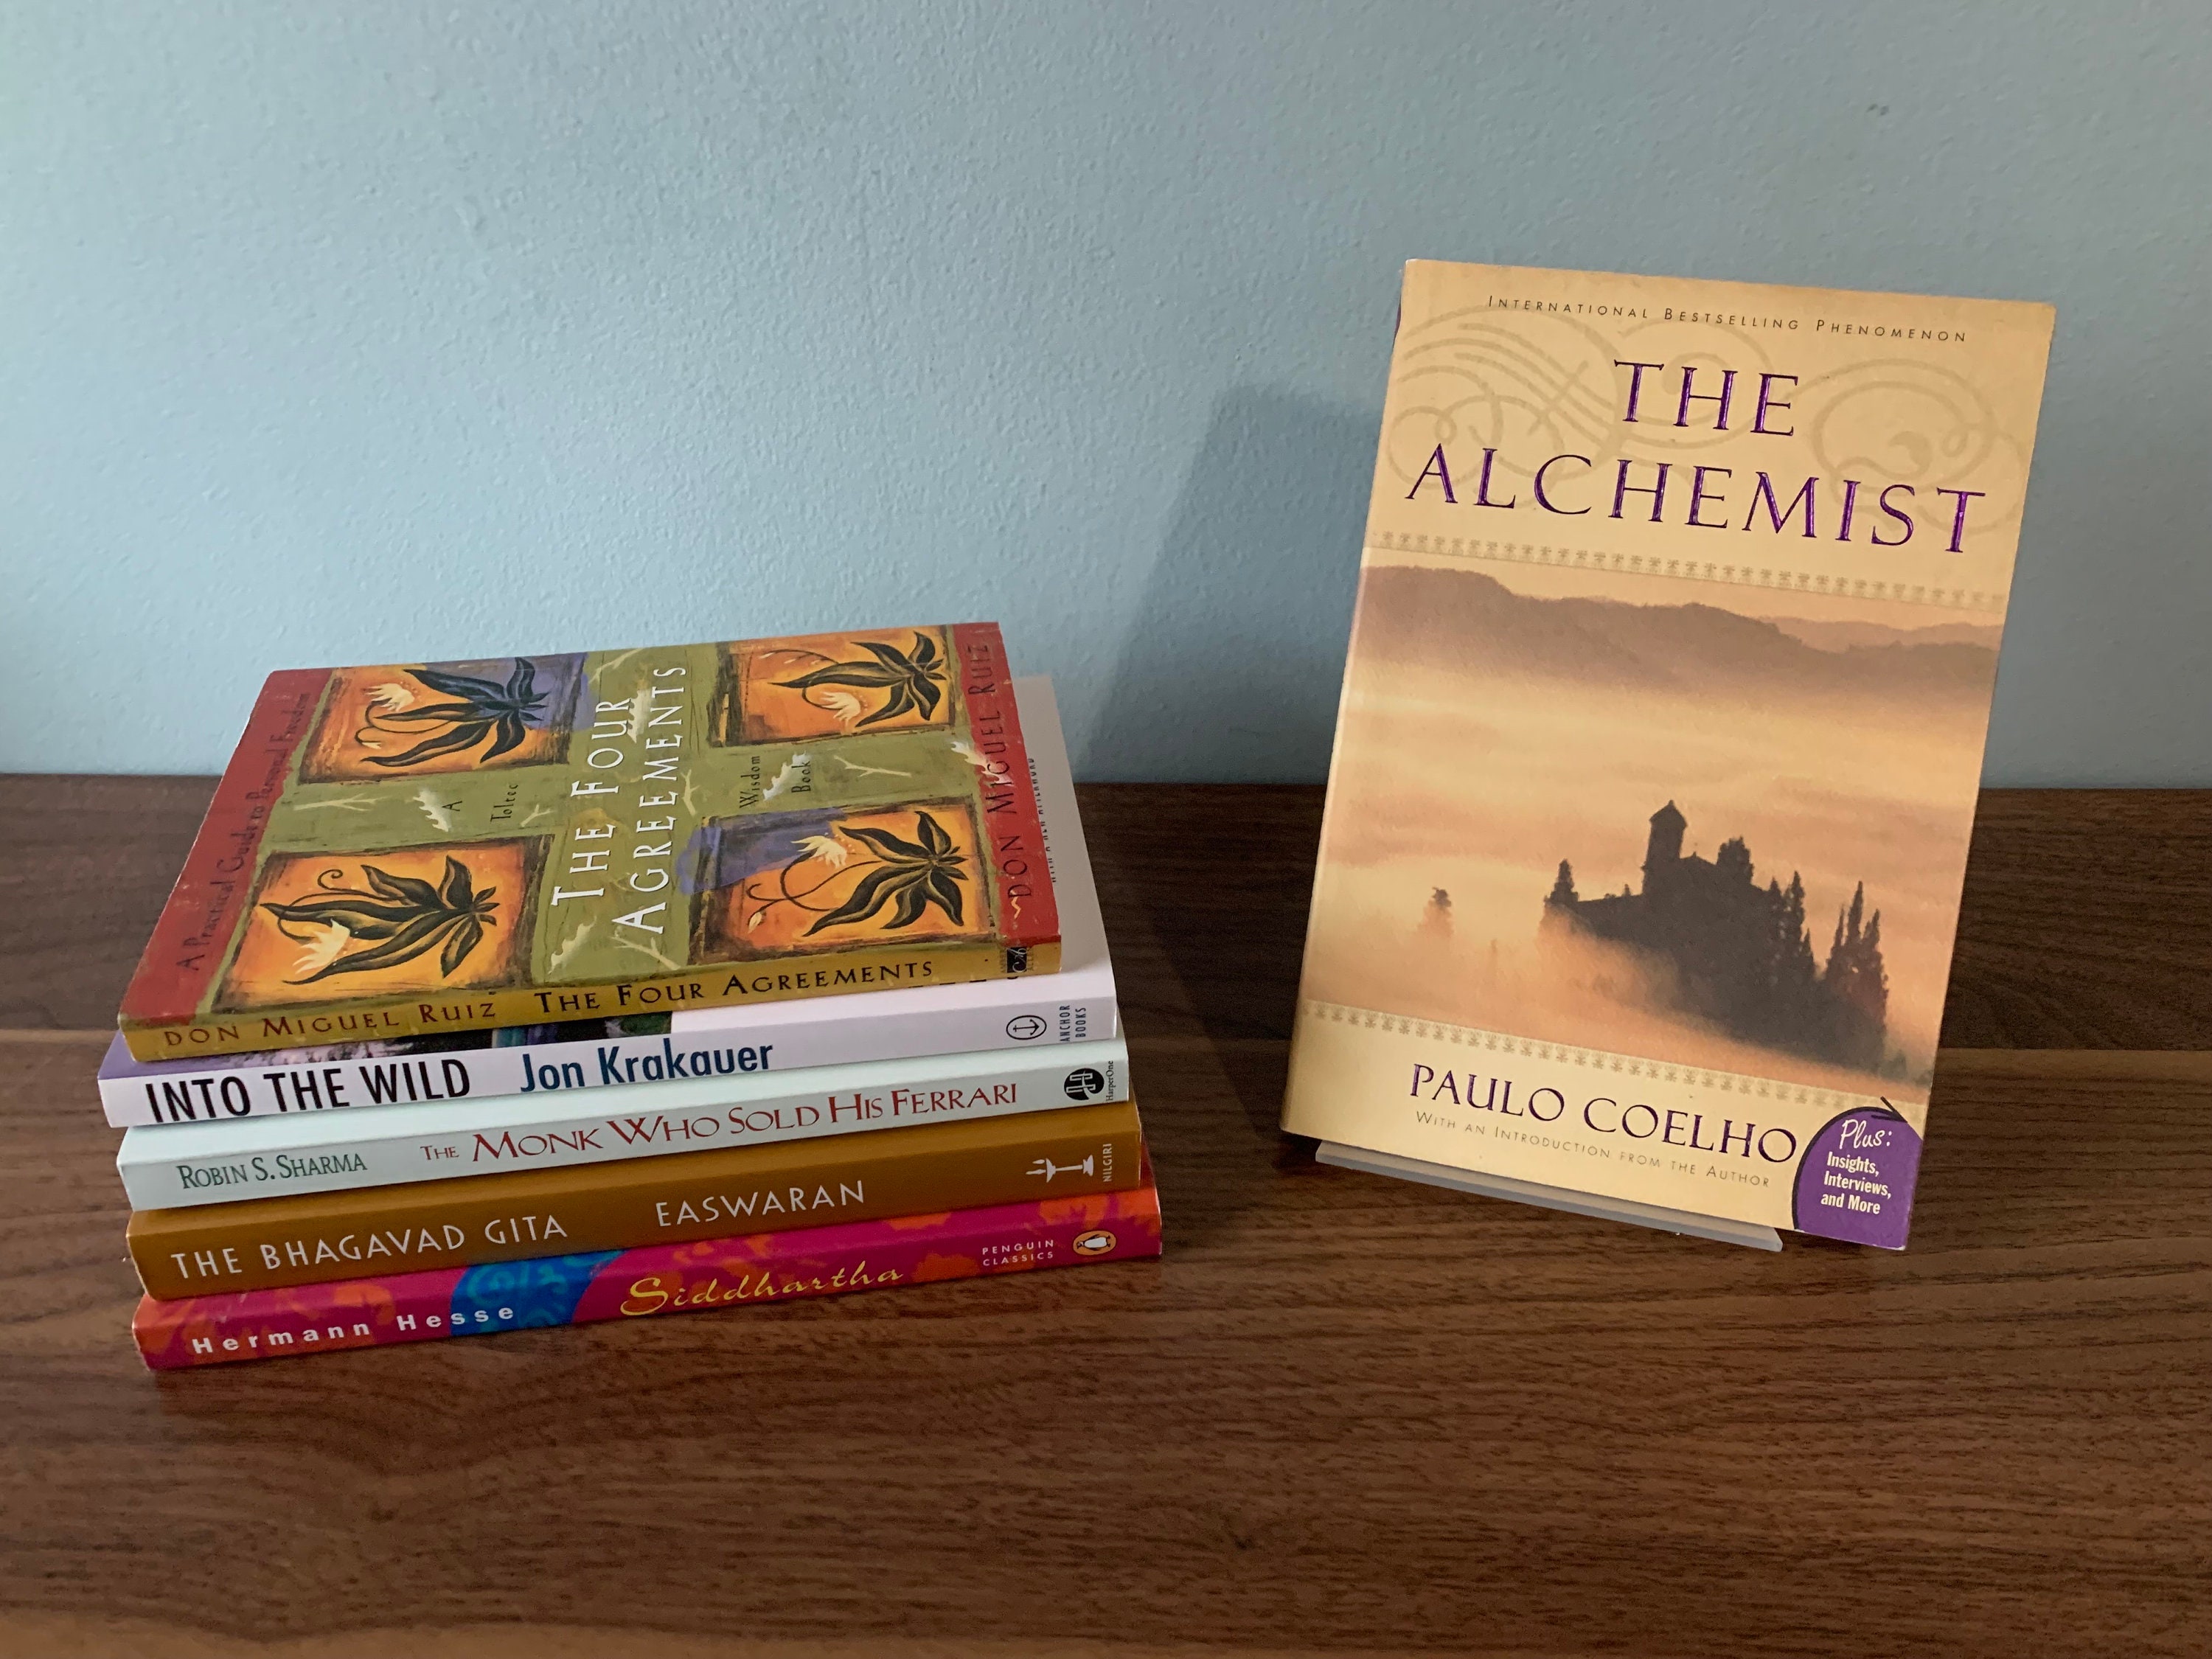 The Alchemist - Paulo Coelho (Book in Hebrew) - Shop Online 